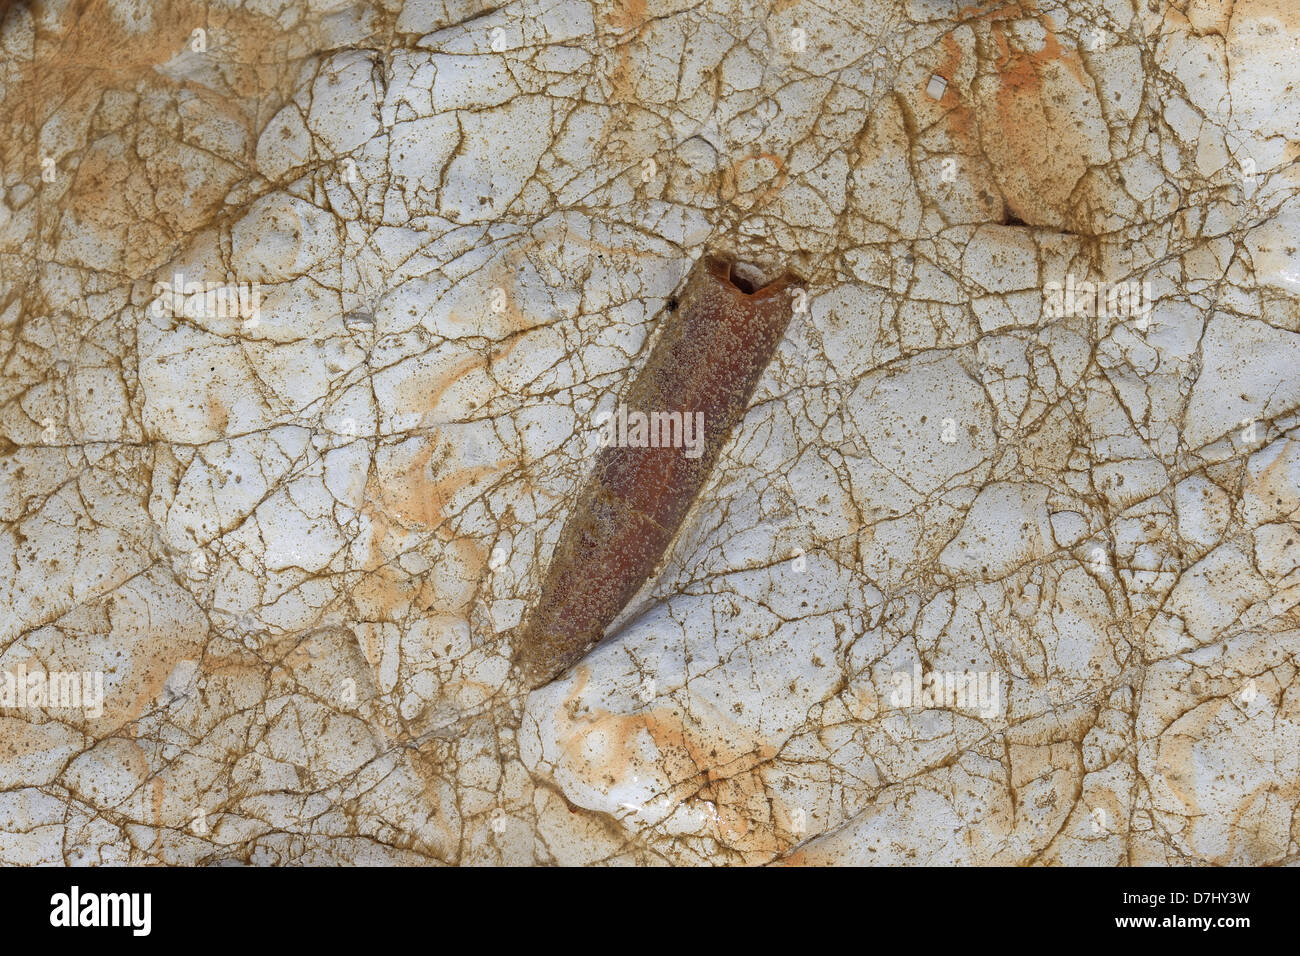 Belemnite fossil Stock Photo